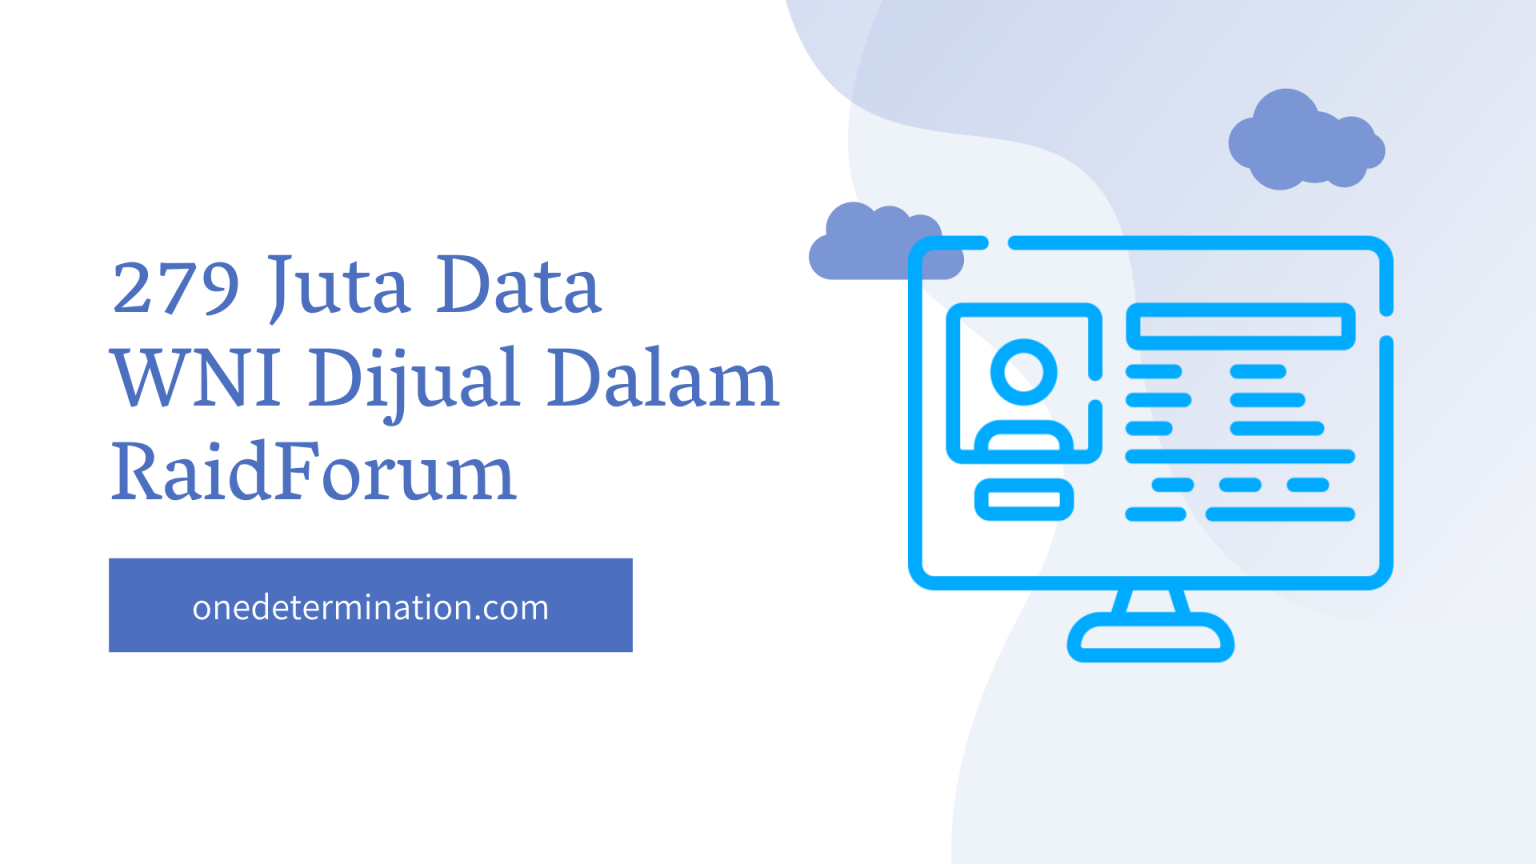 Software Data Penduduk Indonesia